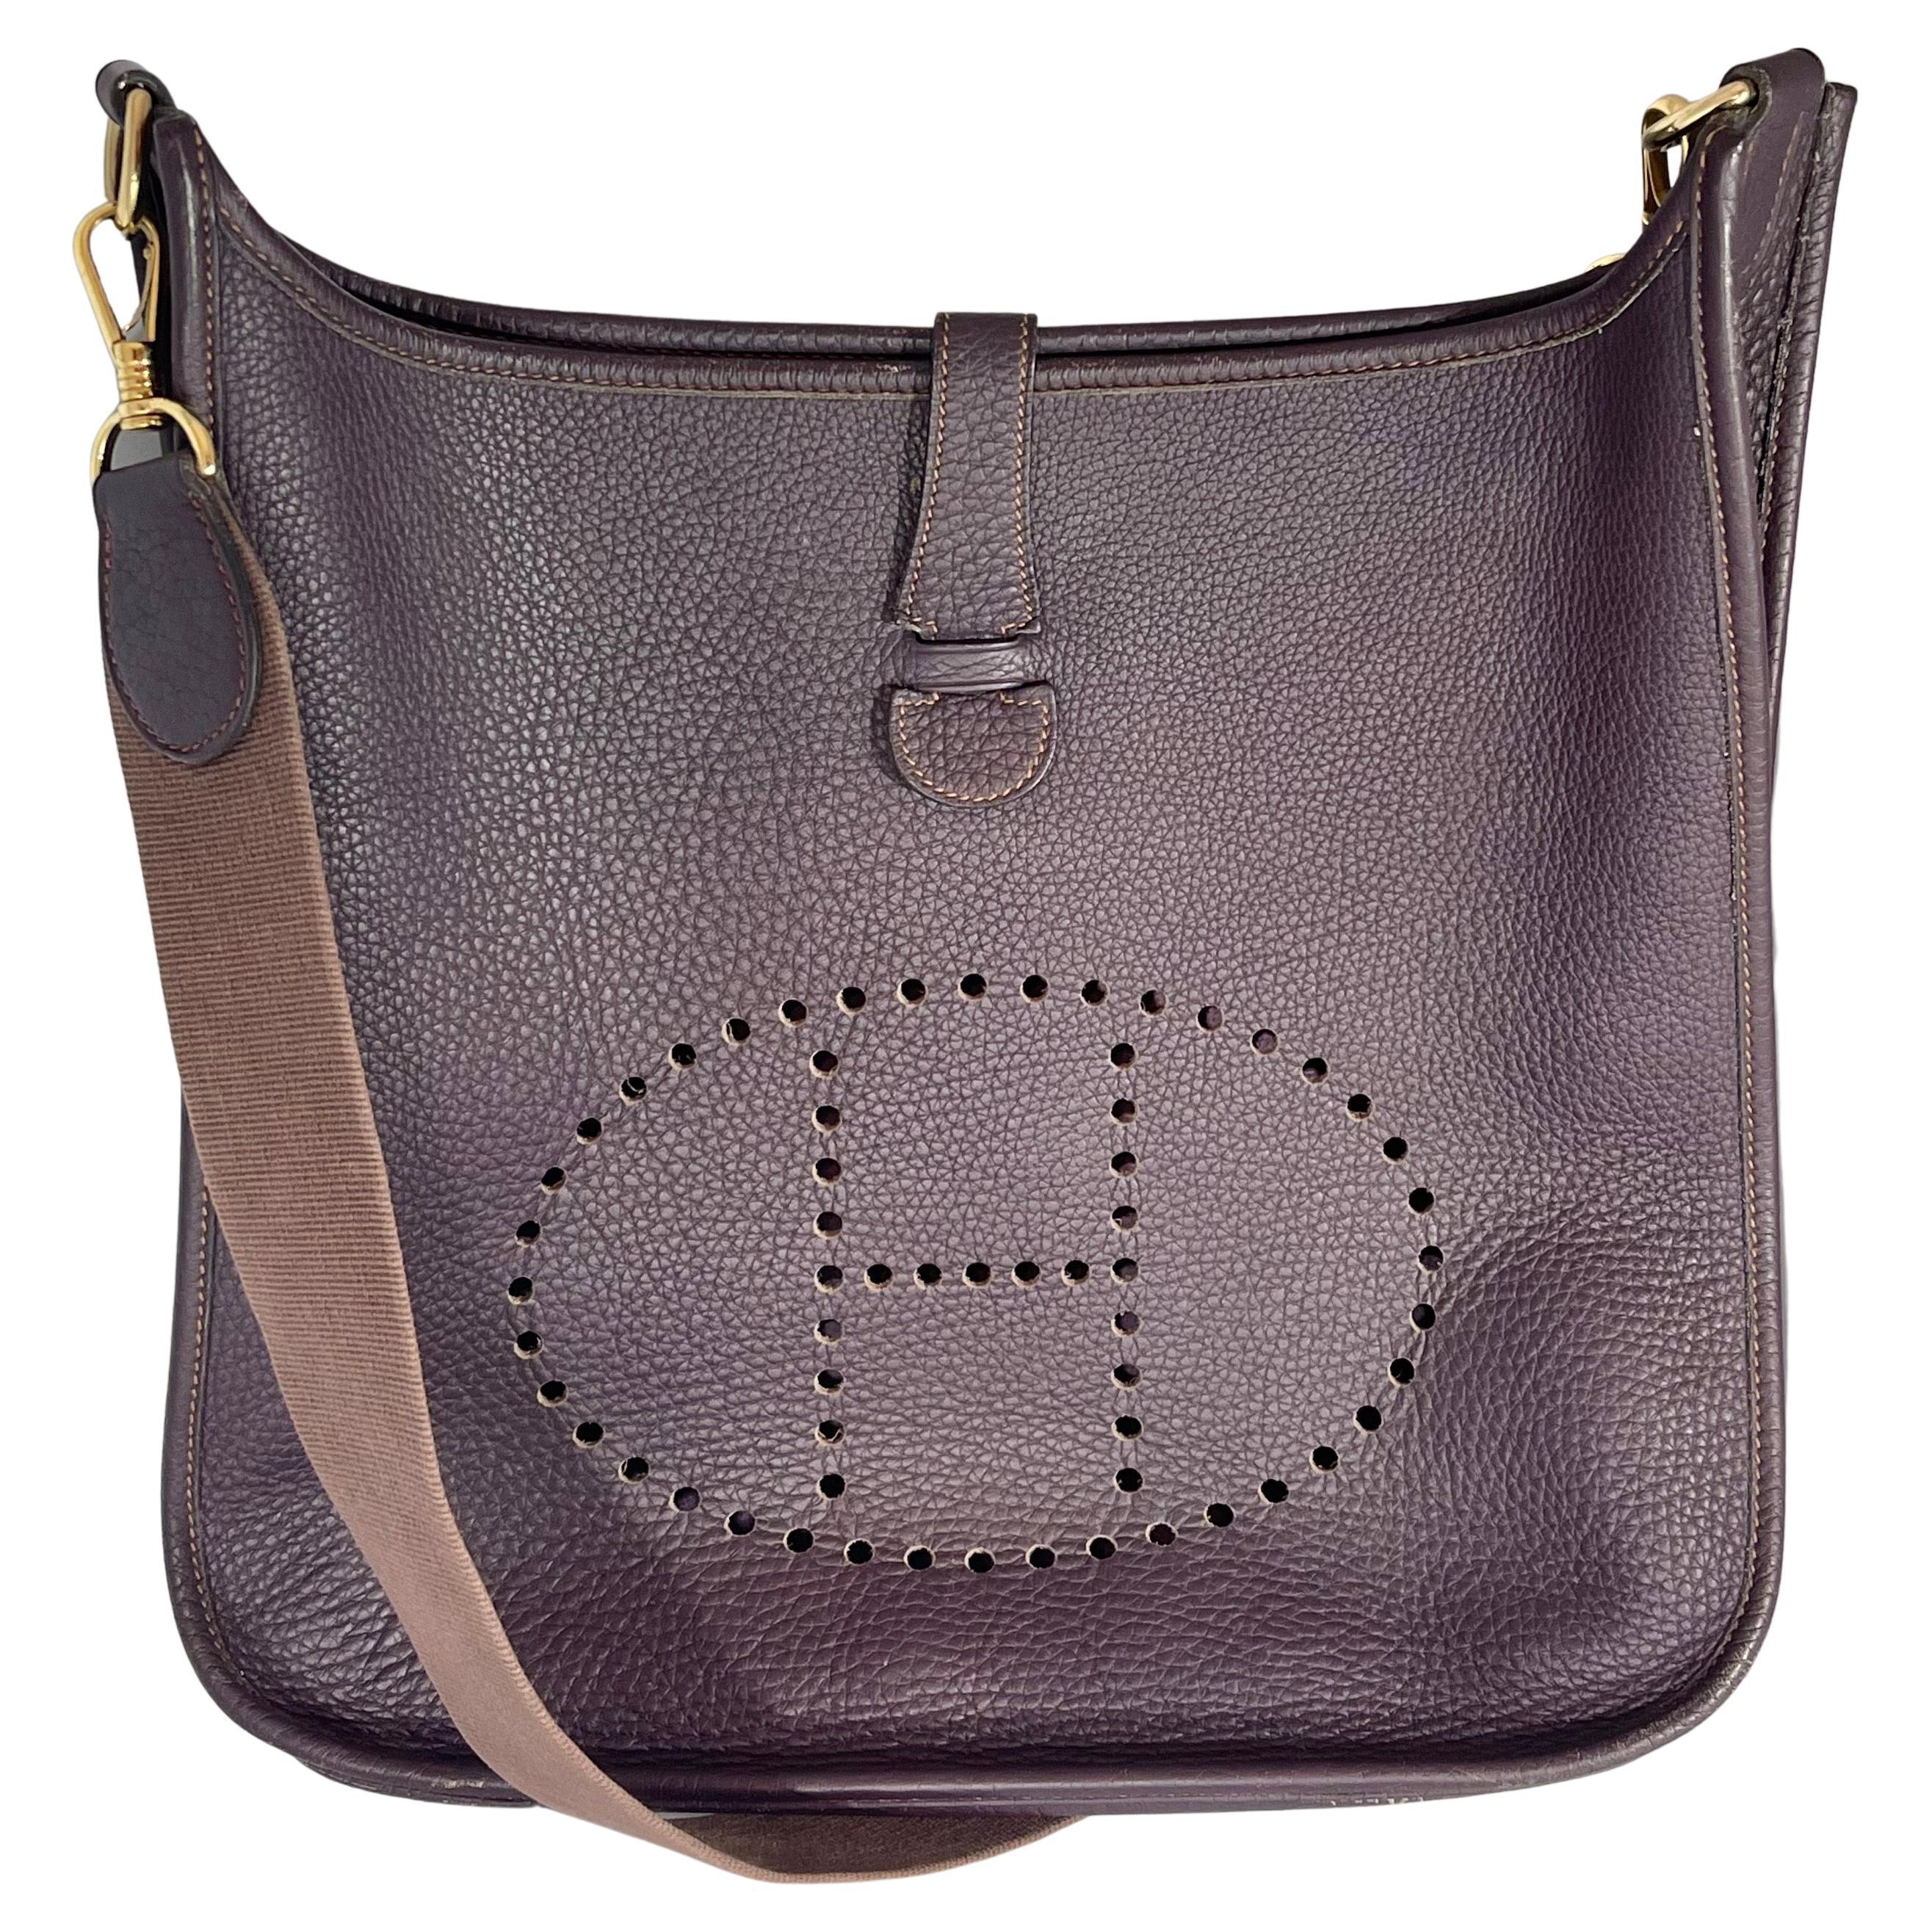 Hermès Evelyne Pm Dark Brown / Chocolate Leather Cross Body Bag Like New